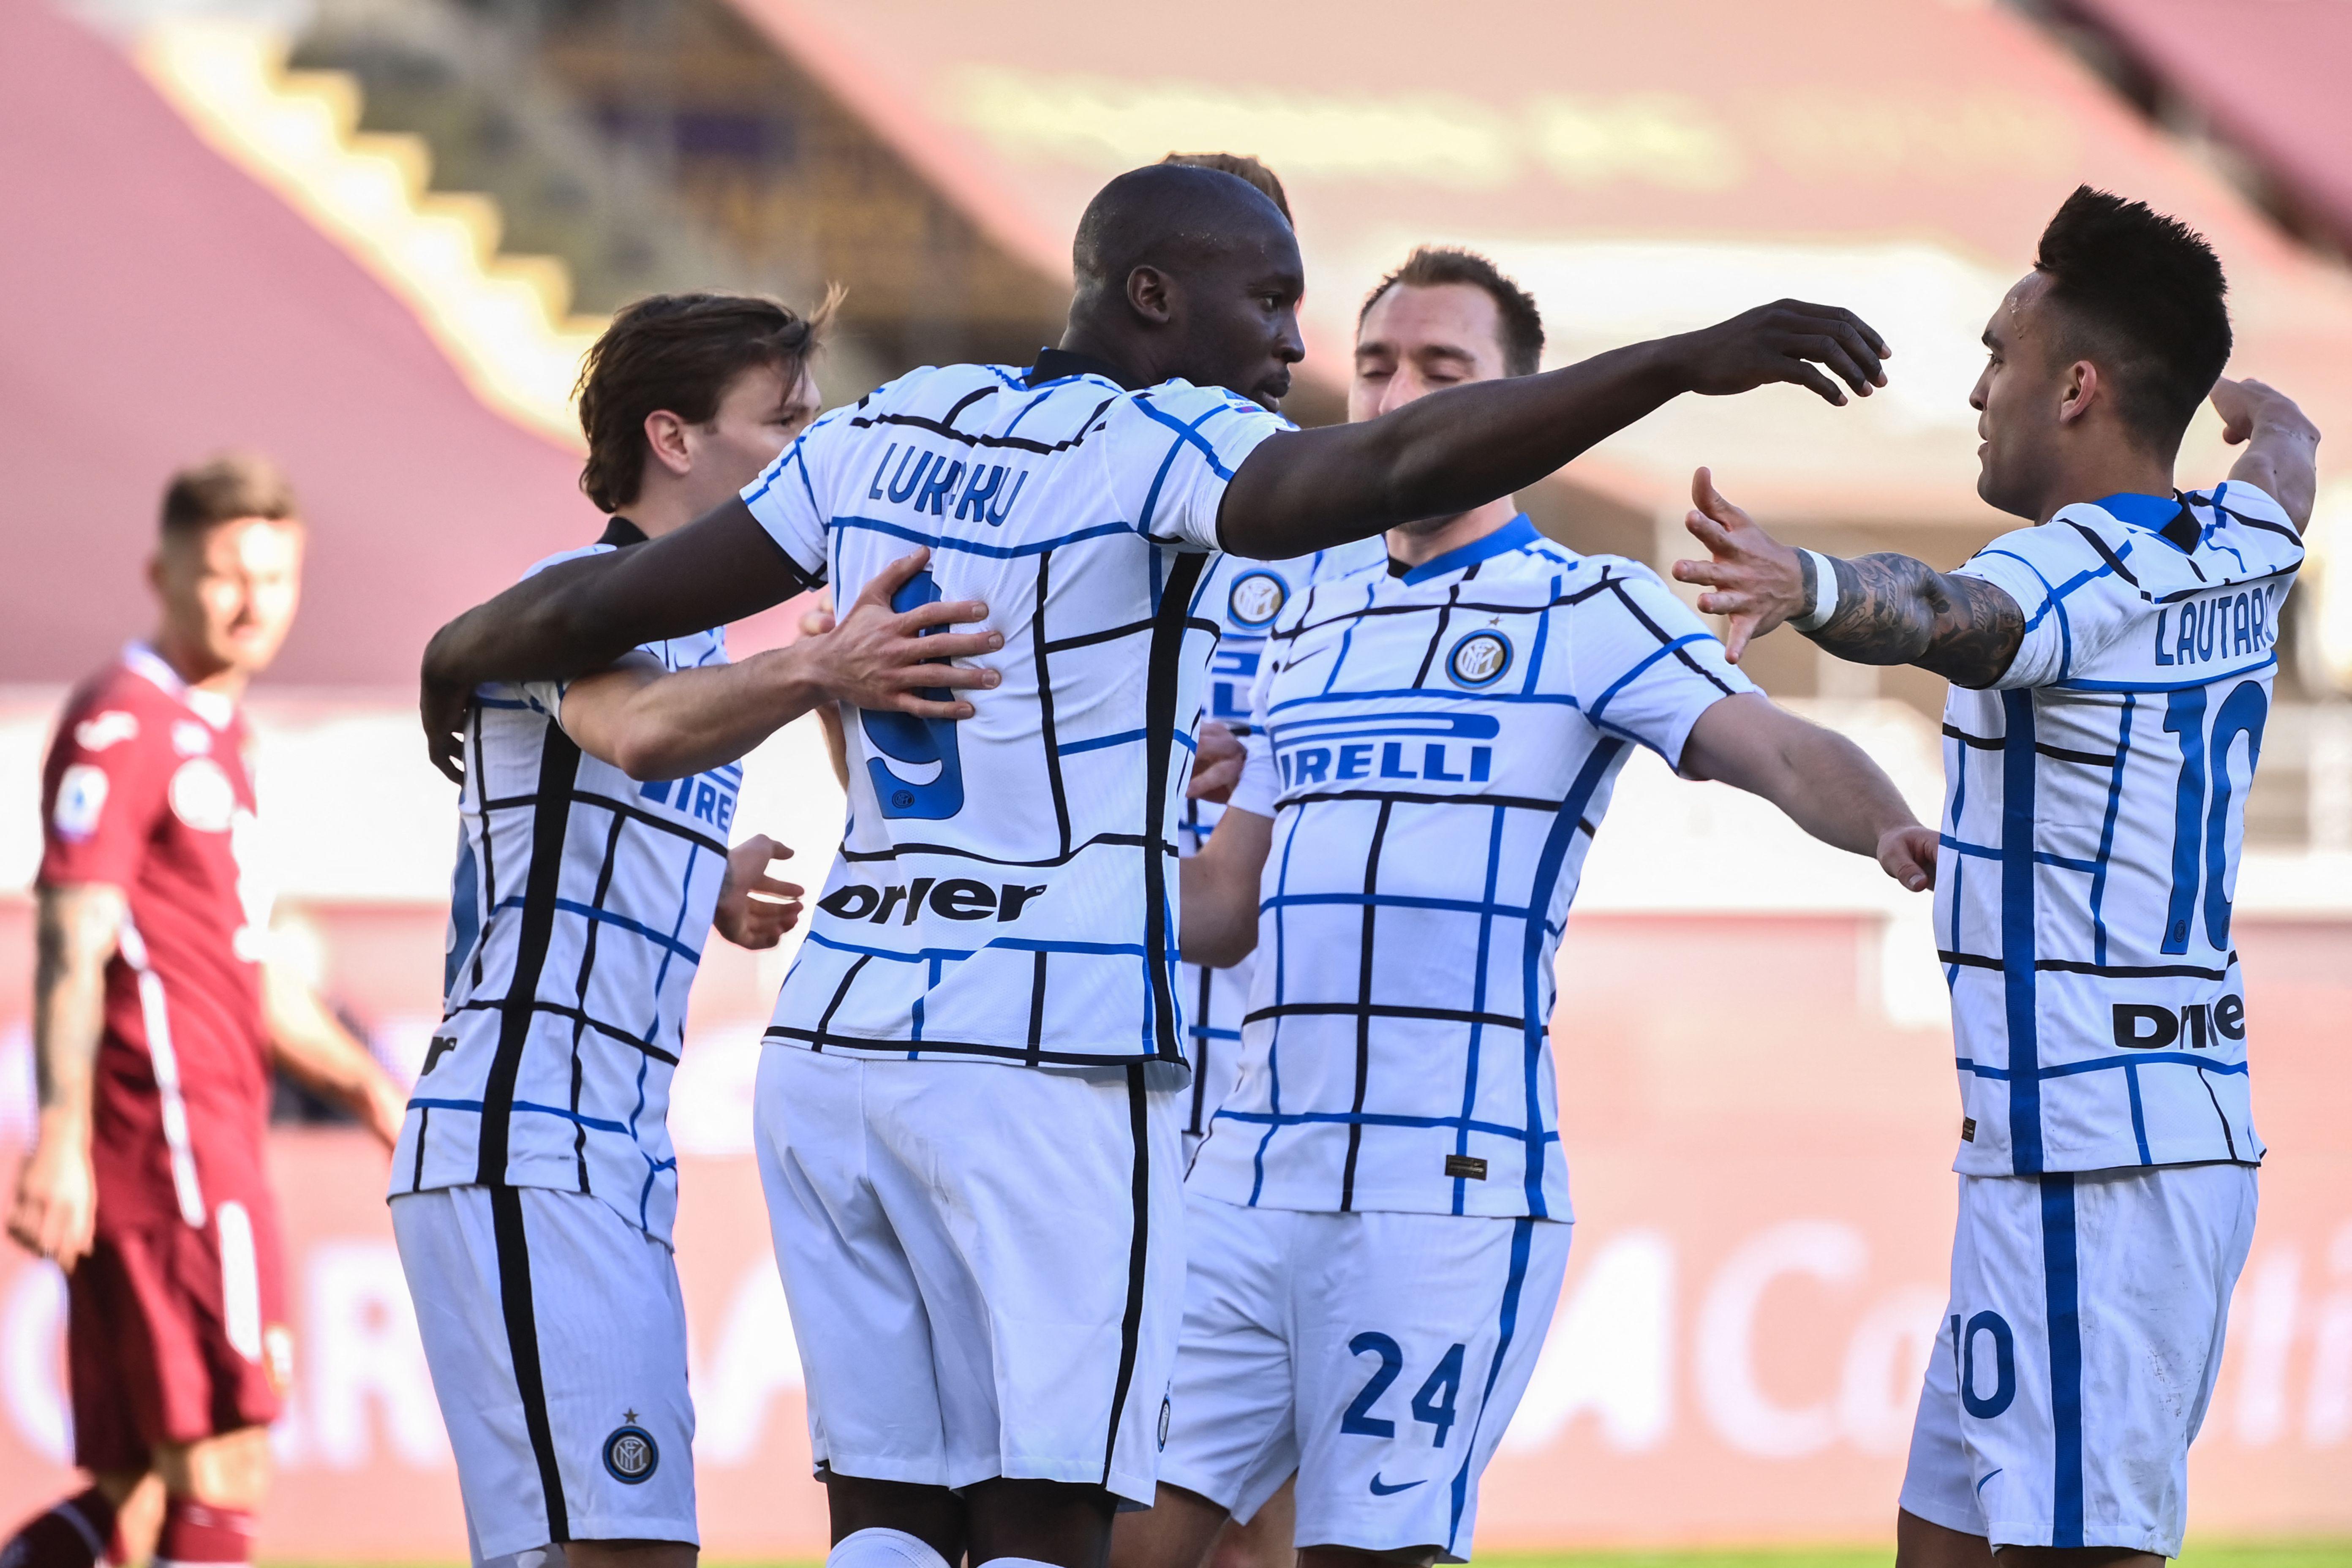 ÖZET | Torino - Inter maç sonucu: 1-2